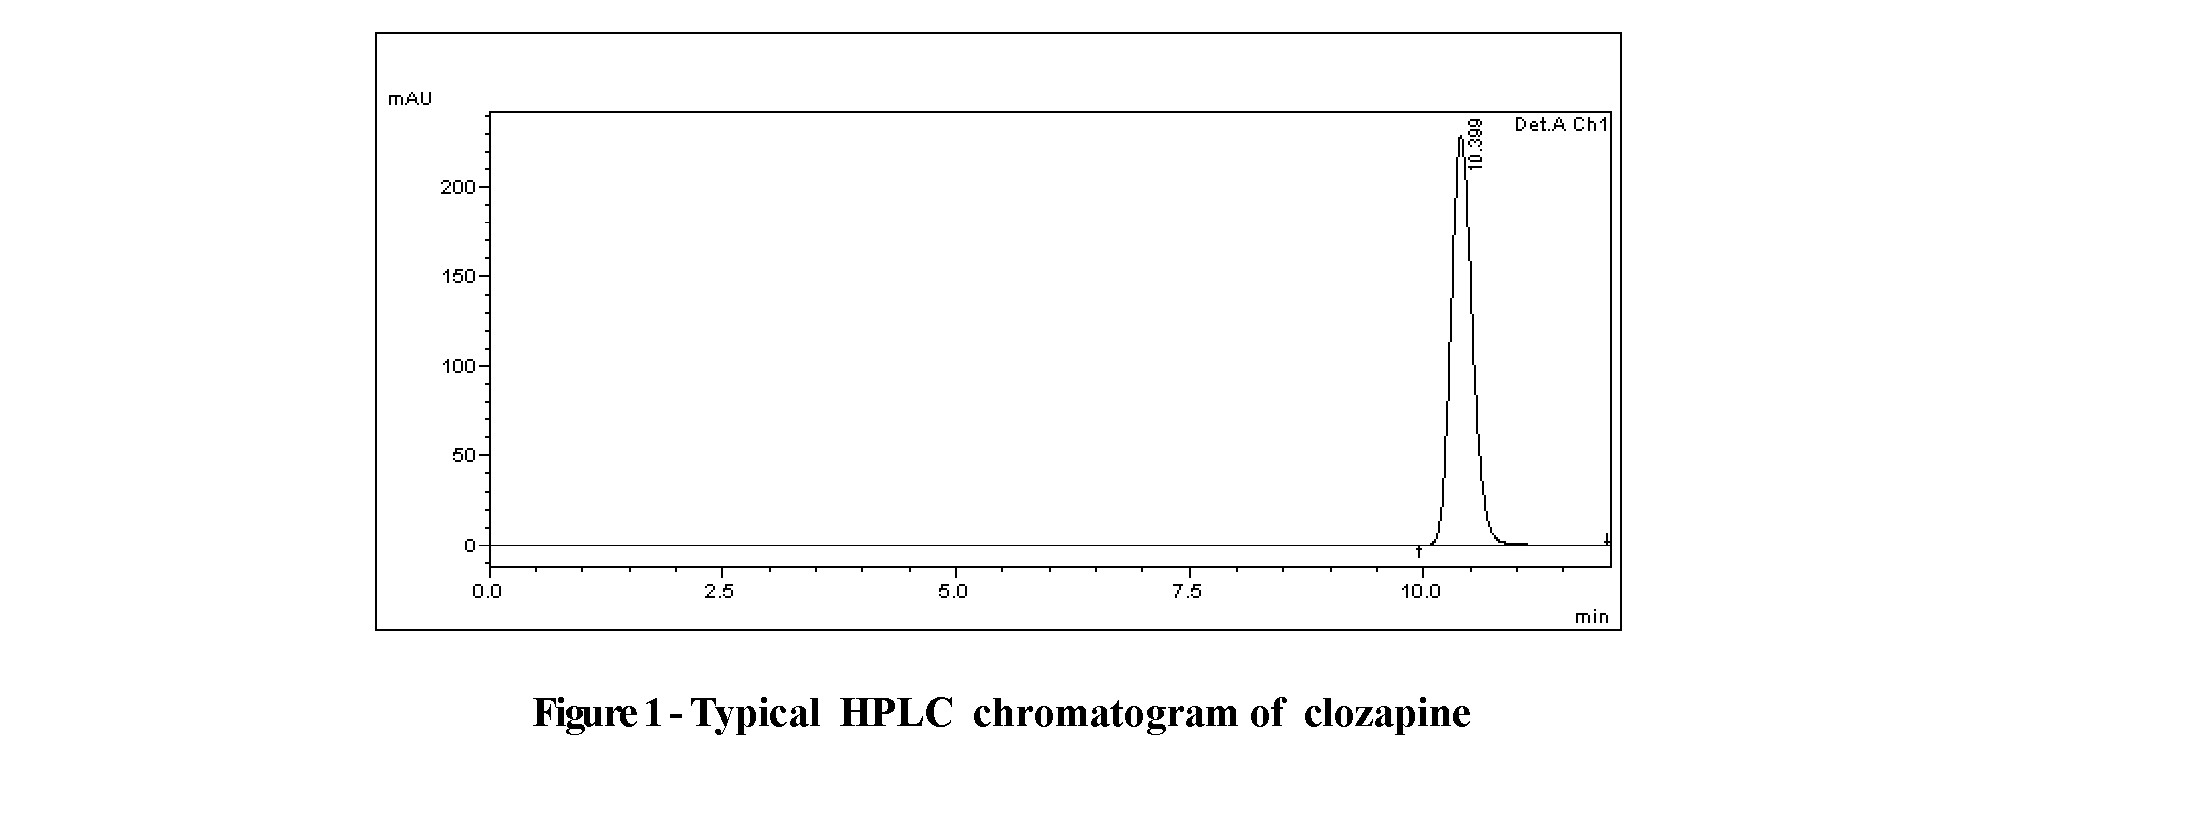 Optimization of clozapine chromatography conditions in biomaterials